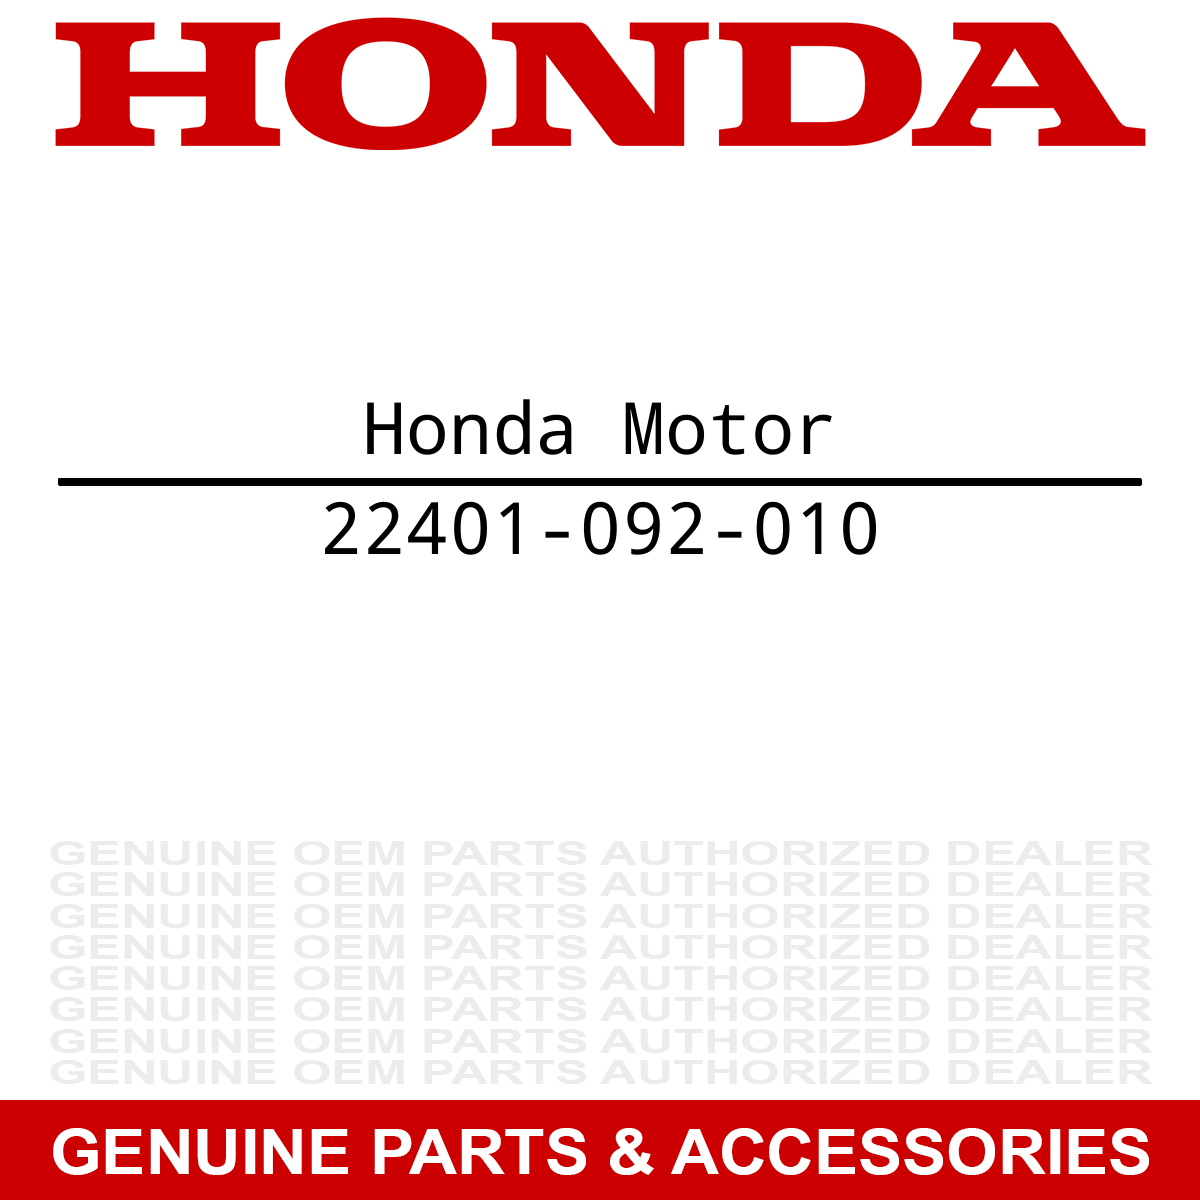 Honda 22401-092-010 Spring Honda FourTrax CT70 C70 2X4 70 Passport